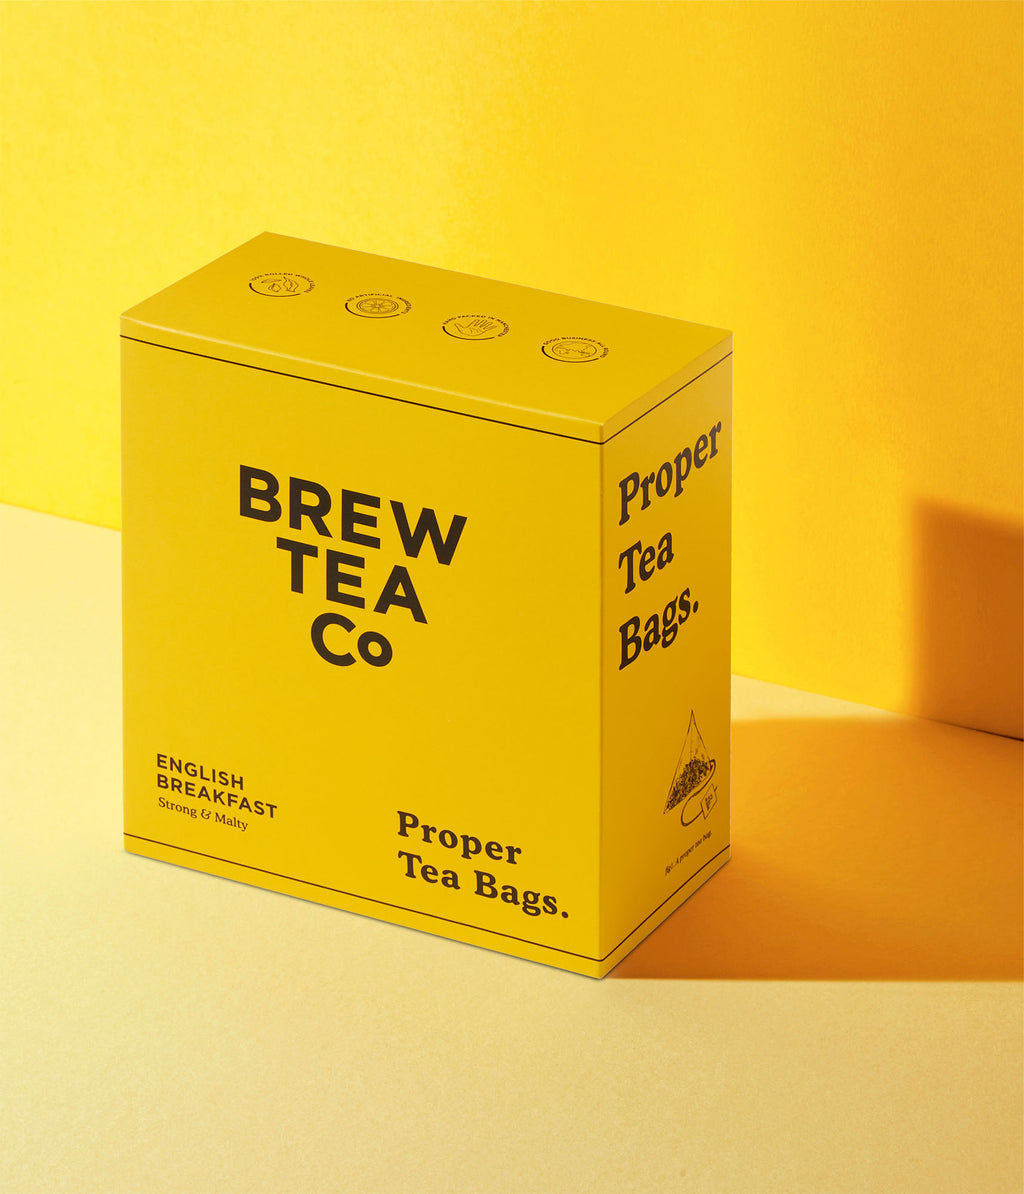 English Breakfast - Proper Tea Bags